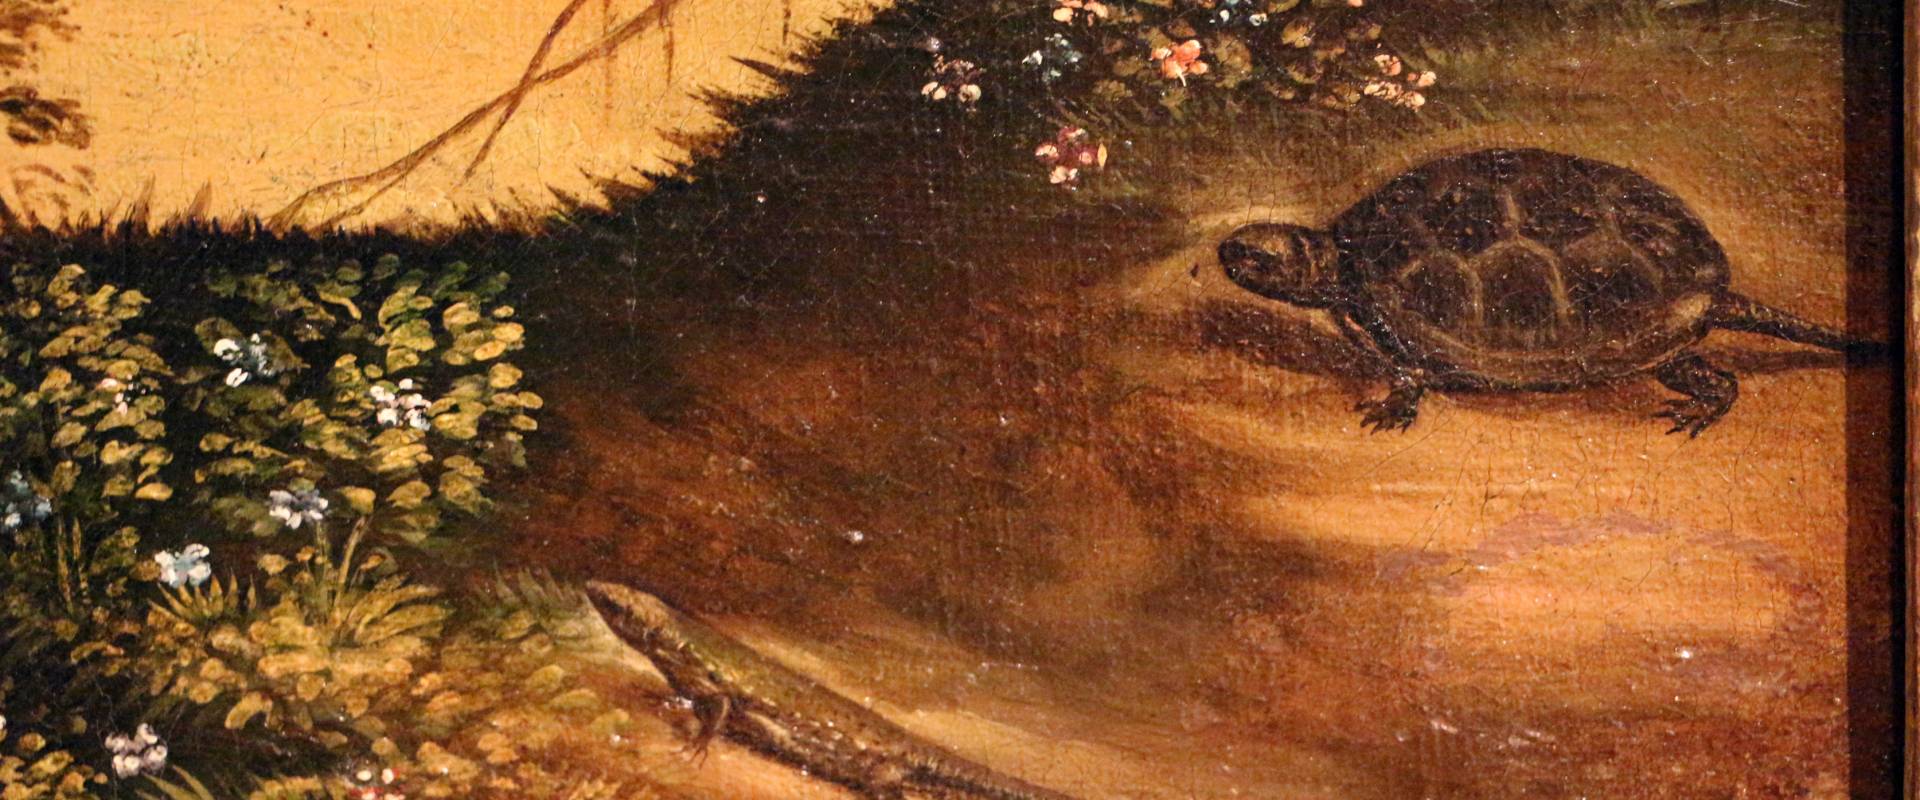 Maestro dei dodici apostoli, giacobbe e rachele al pozzo, ferrara 1500-50 ca. 10 tartaruga e lucertola photo by Sailko